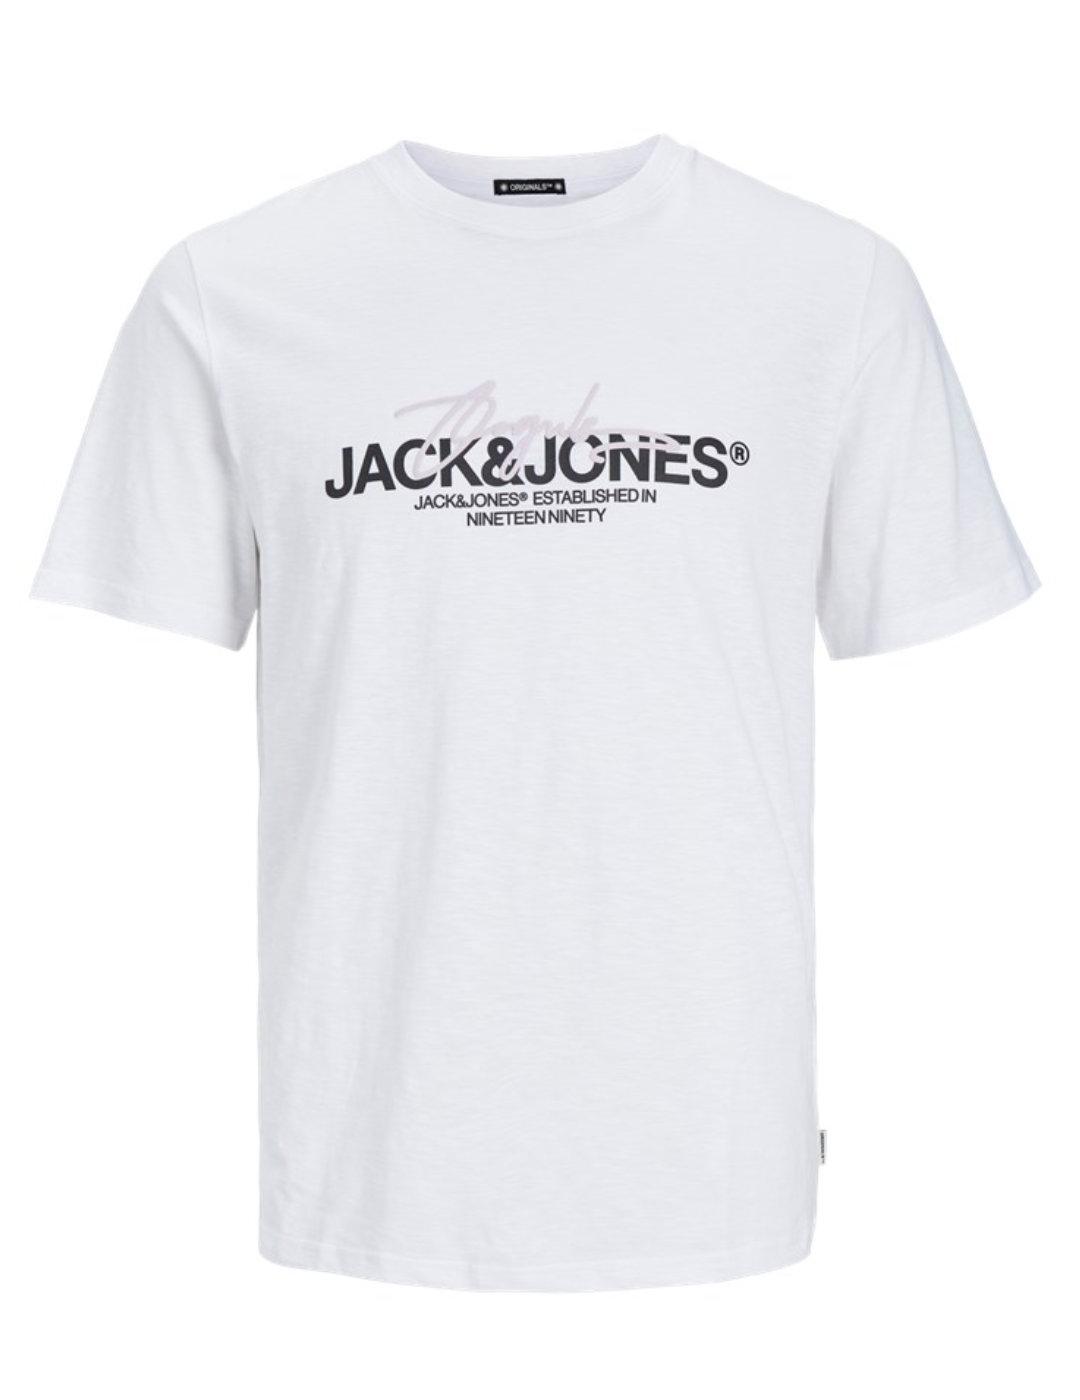 Camiseta Jack&Jones Aruba blanco manga corta para hombre